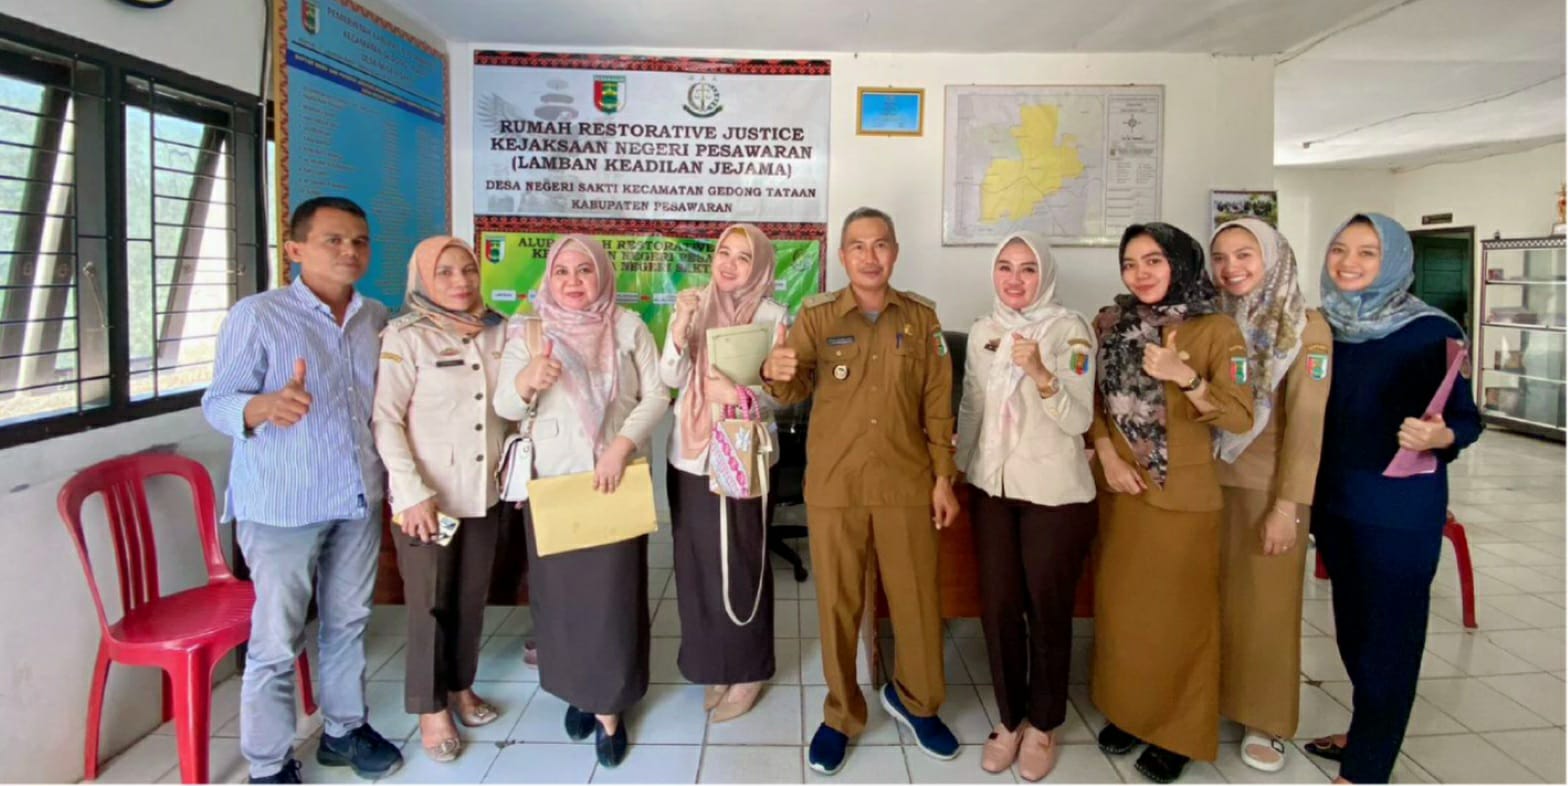 Petugas Samsat Kabupaten Pesawaran bersama pemerintah desa Negerisakti Gedongtataan